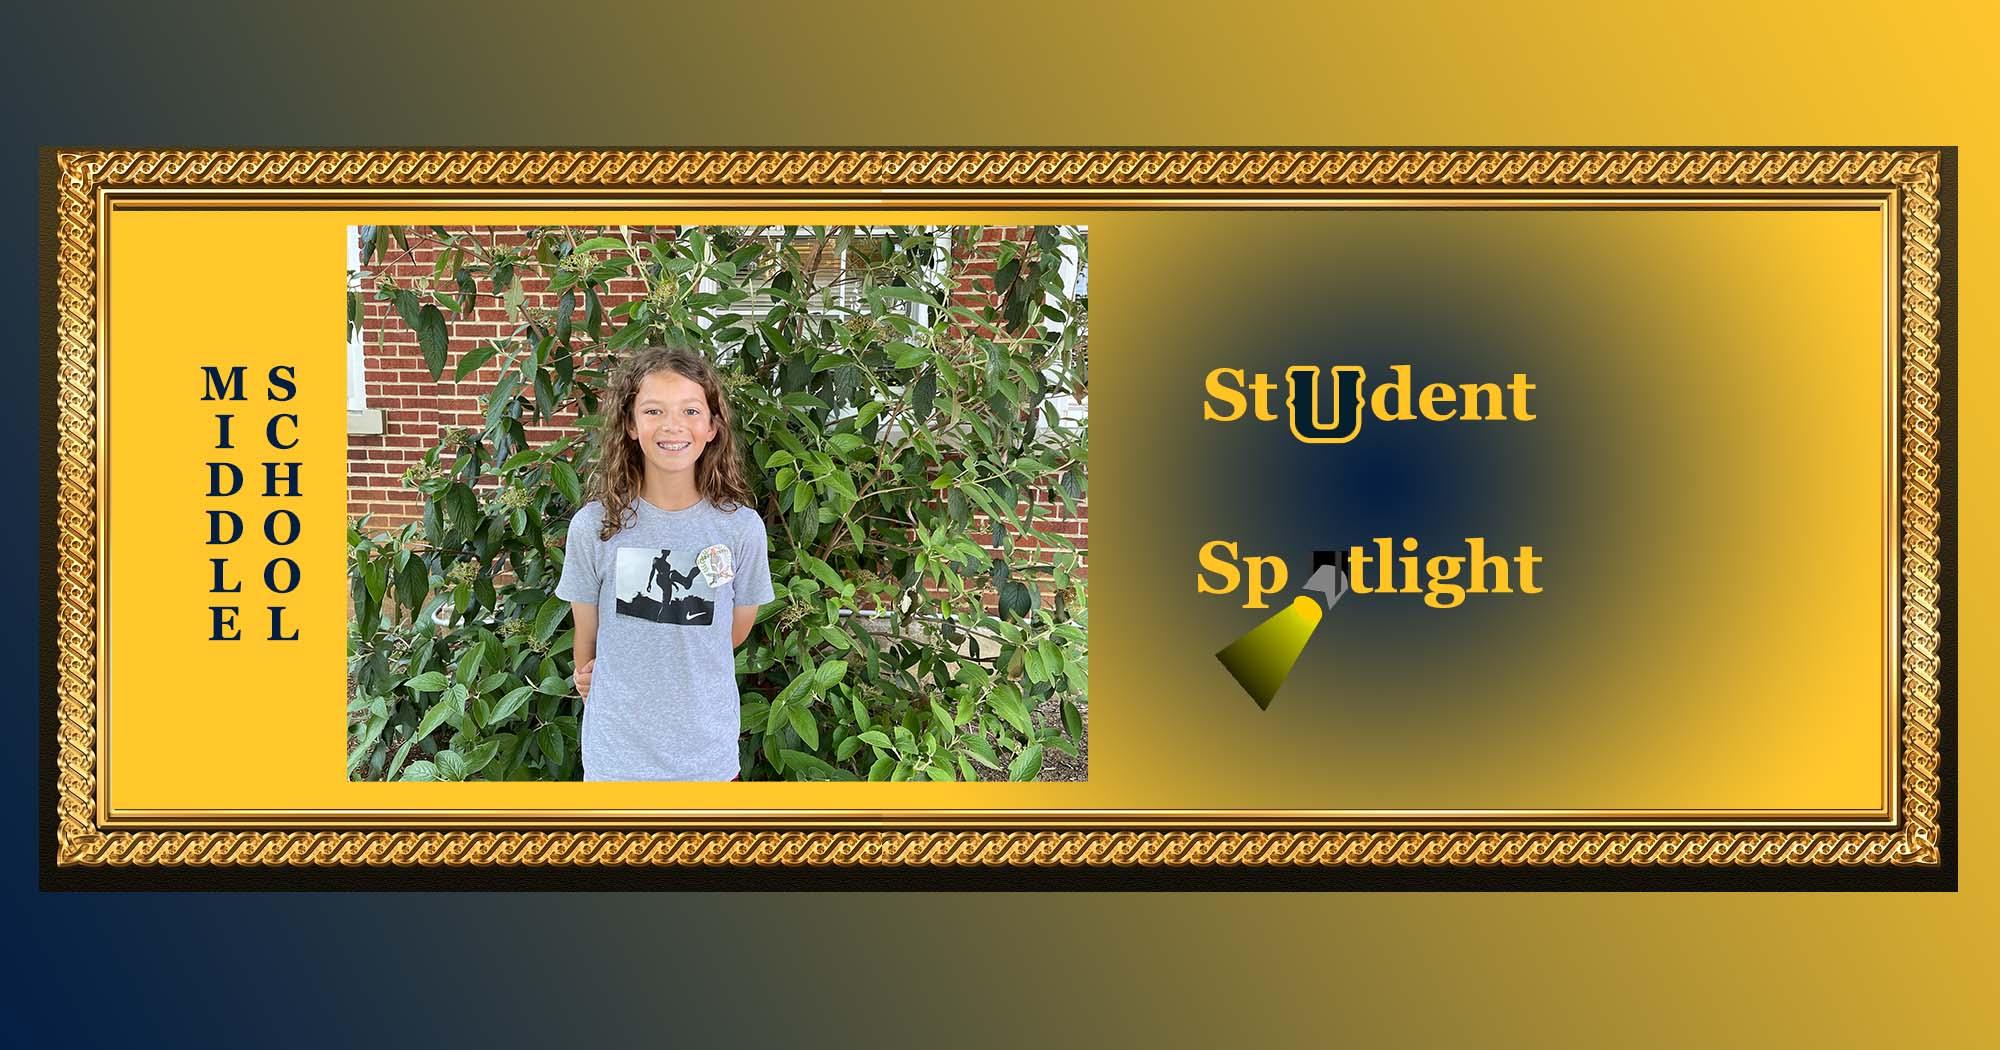 University Middle School Student Spotlight - May 8, 2022